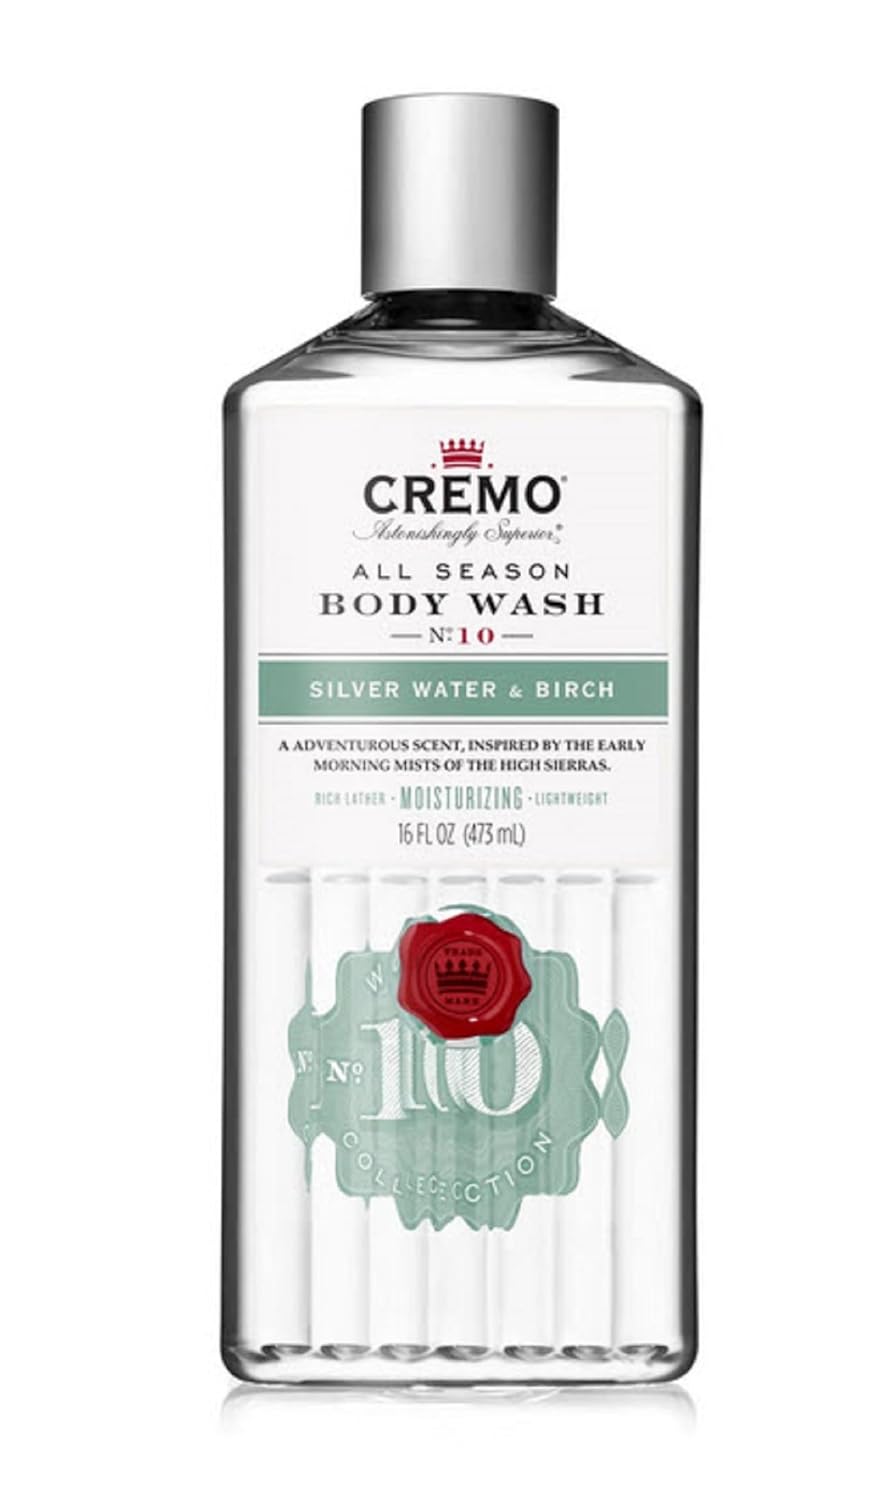 Cremo Rich-Lathering Silver Water & Birch Body Wash for Men, A Revitalizing Combination of Glacier-Fed Streams and White Birch 16 Fl Oz